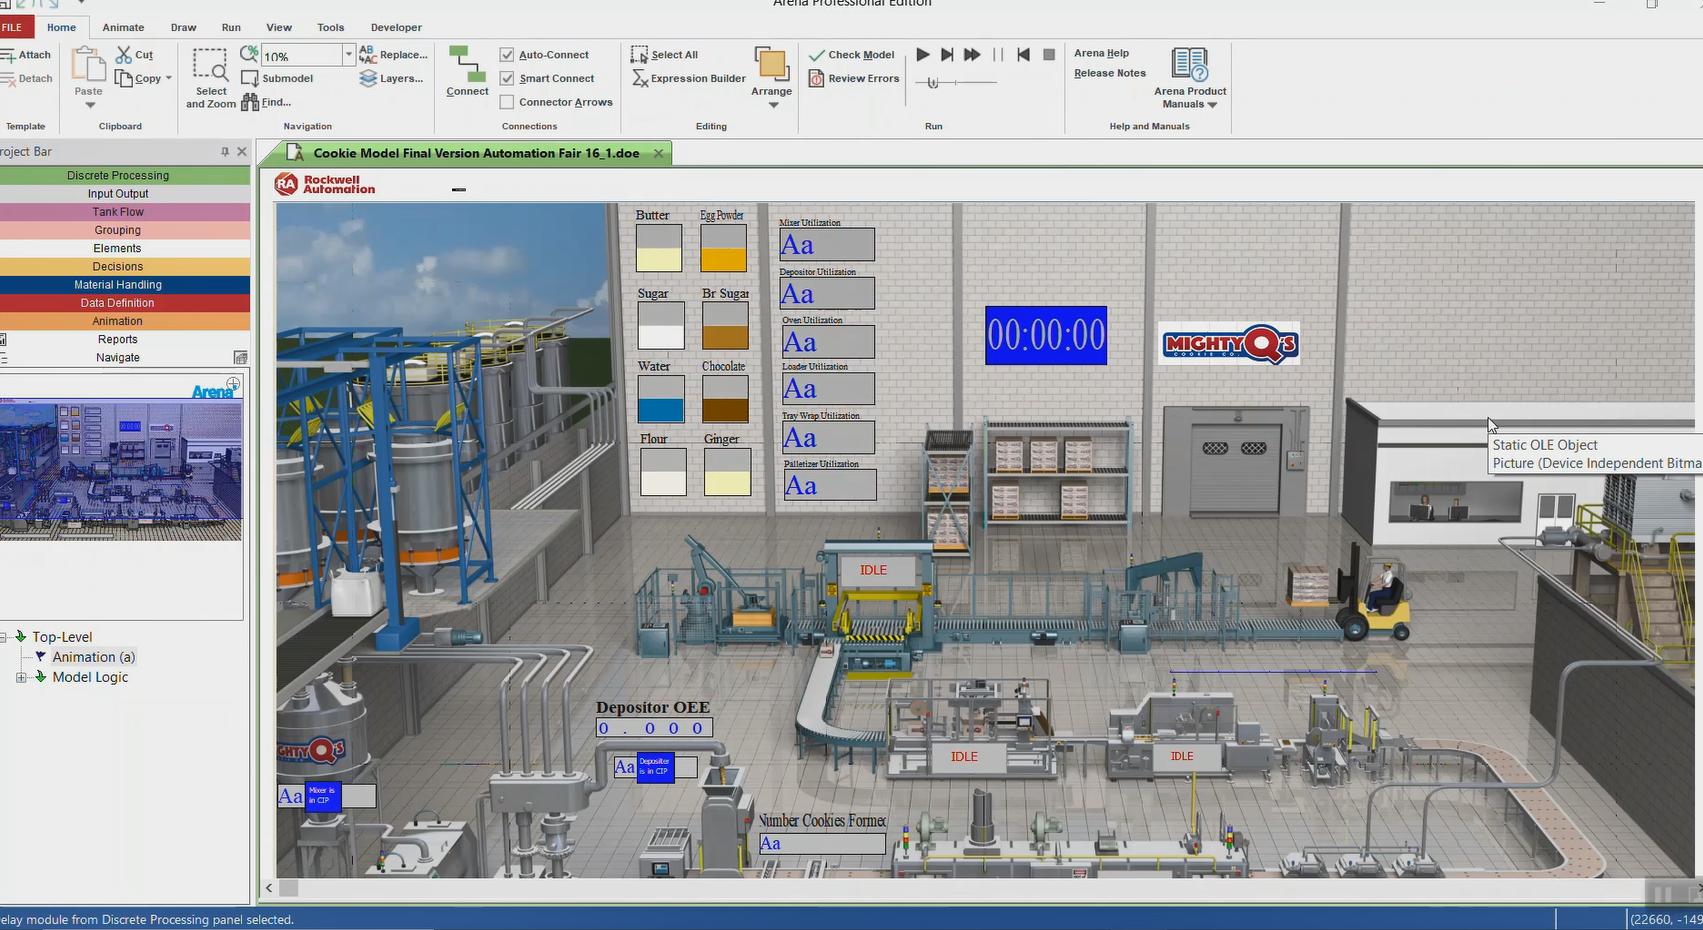 Logistics  Arena Simulation Software